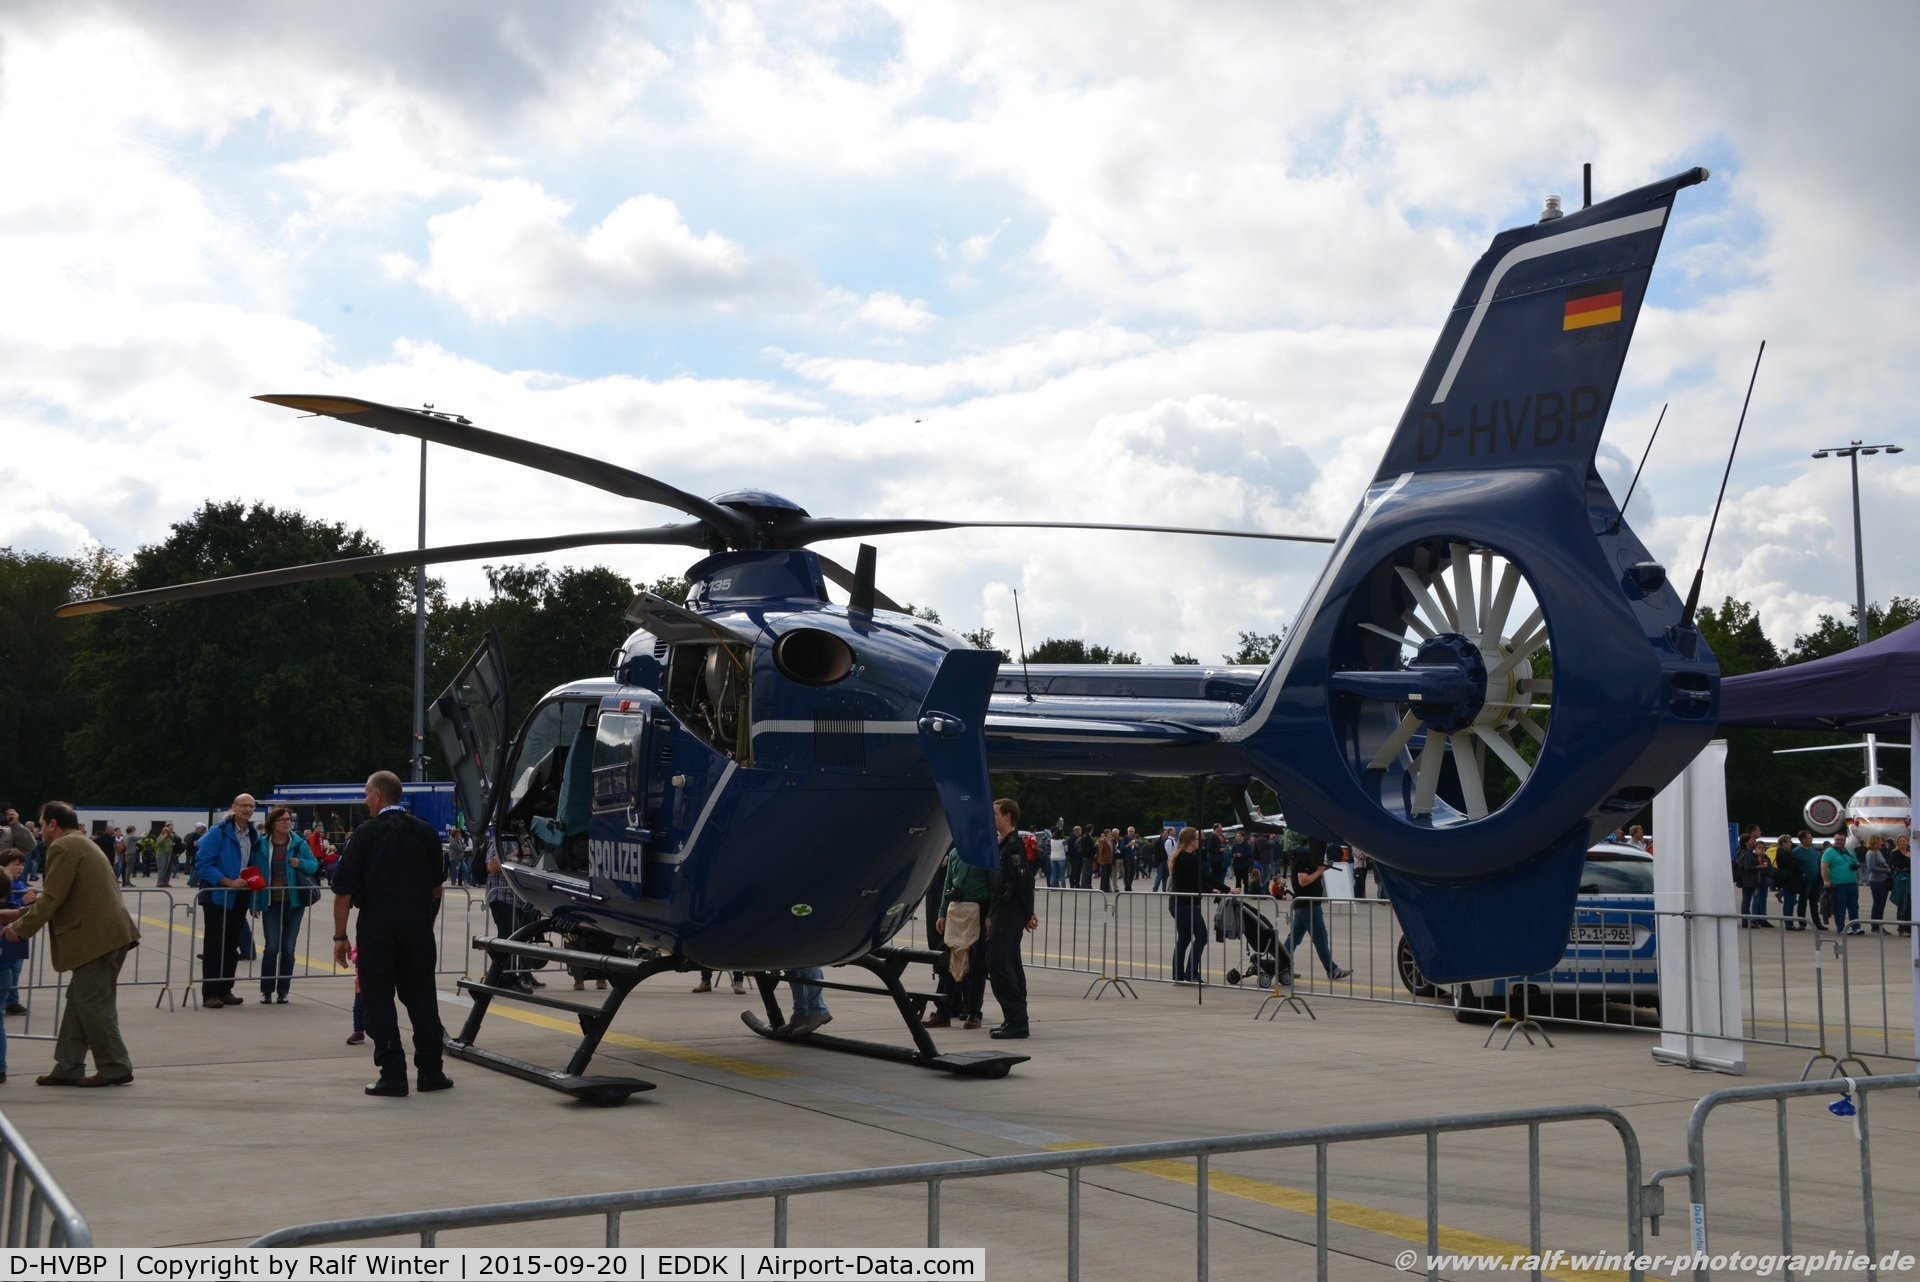 D-HVBP, 2002 Eurocopter EC-135T-2 C/N 0264, Eurocopter EC-135T2 - BPO Bundespolizei - 0264 - D-HVBP - 20.09.2015 - CGN